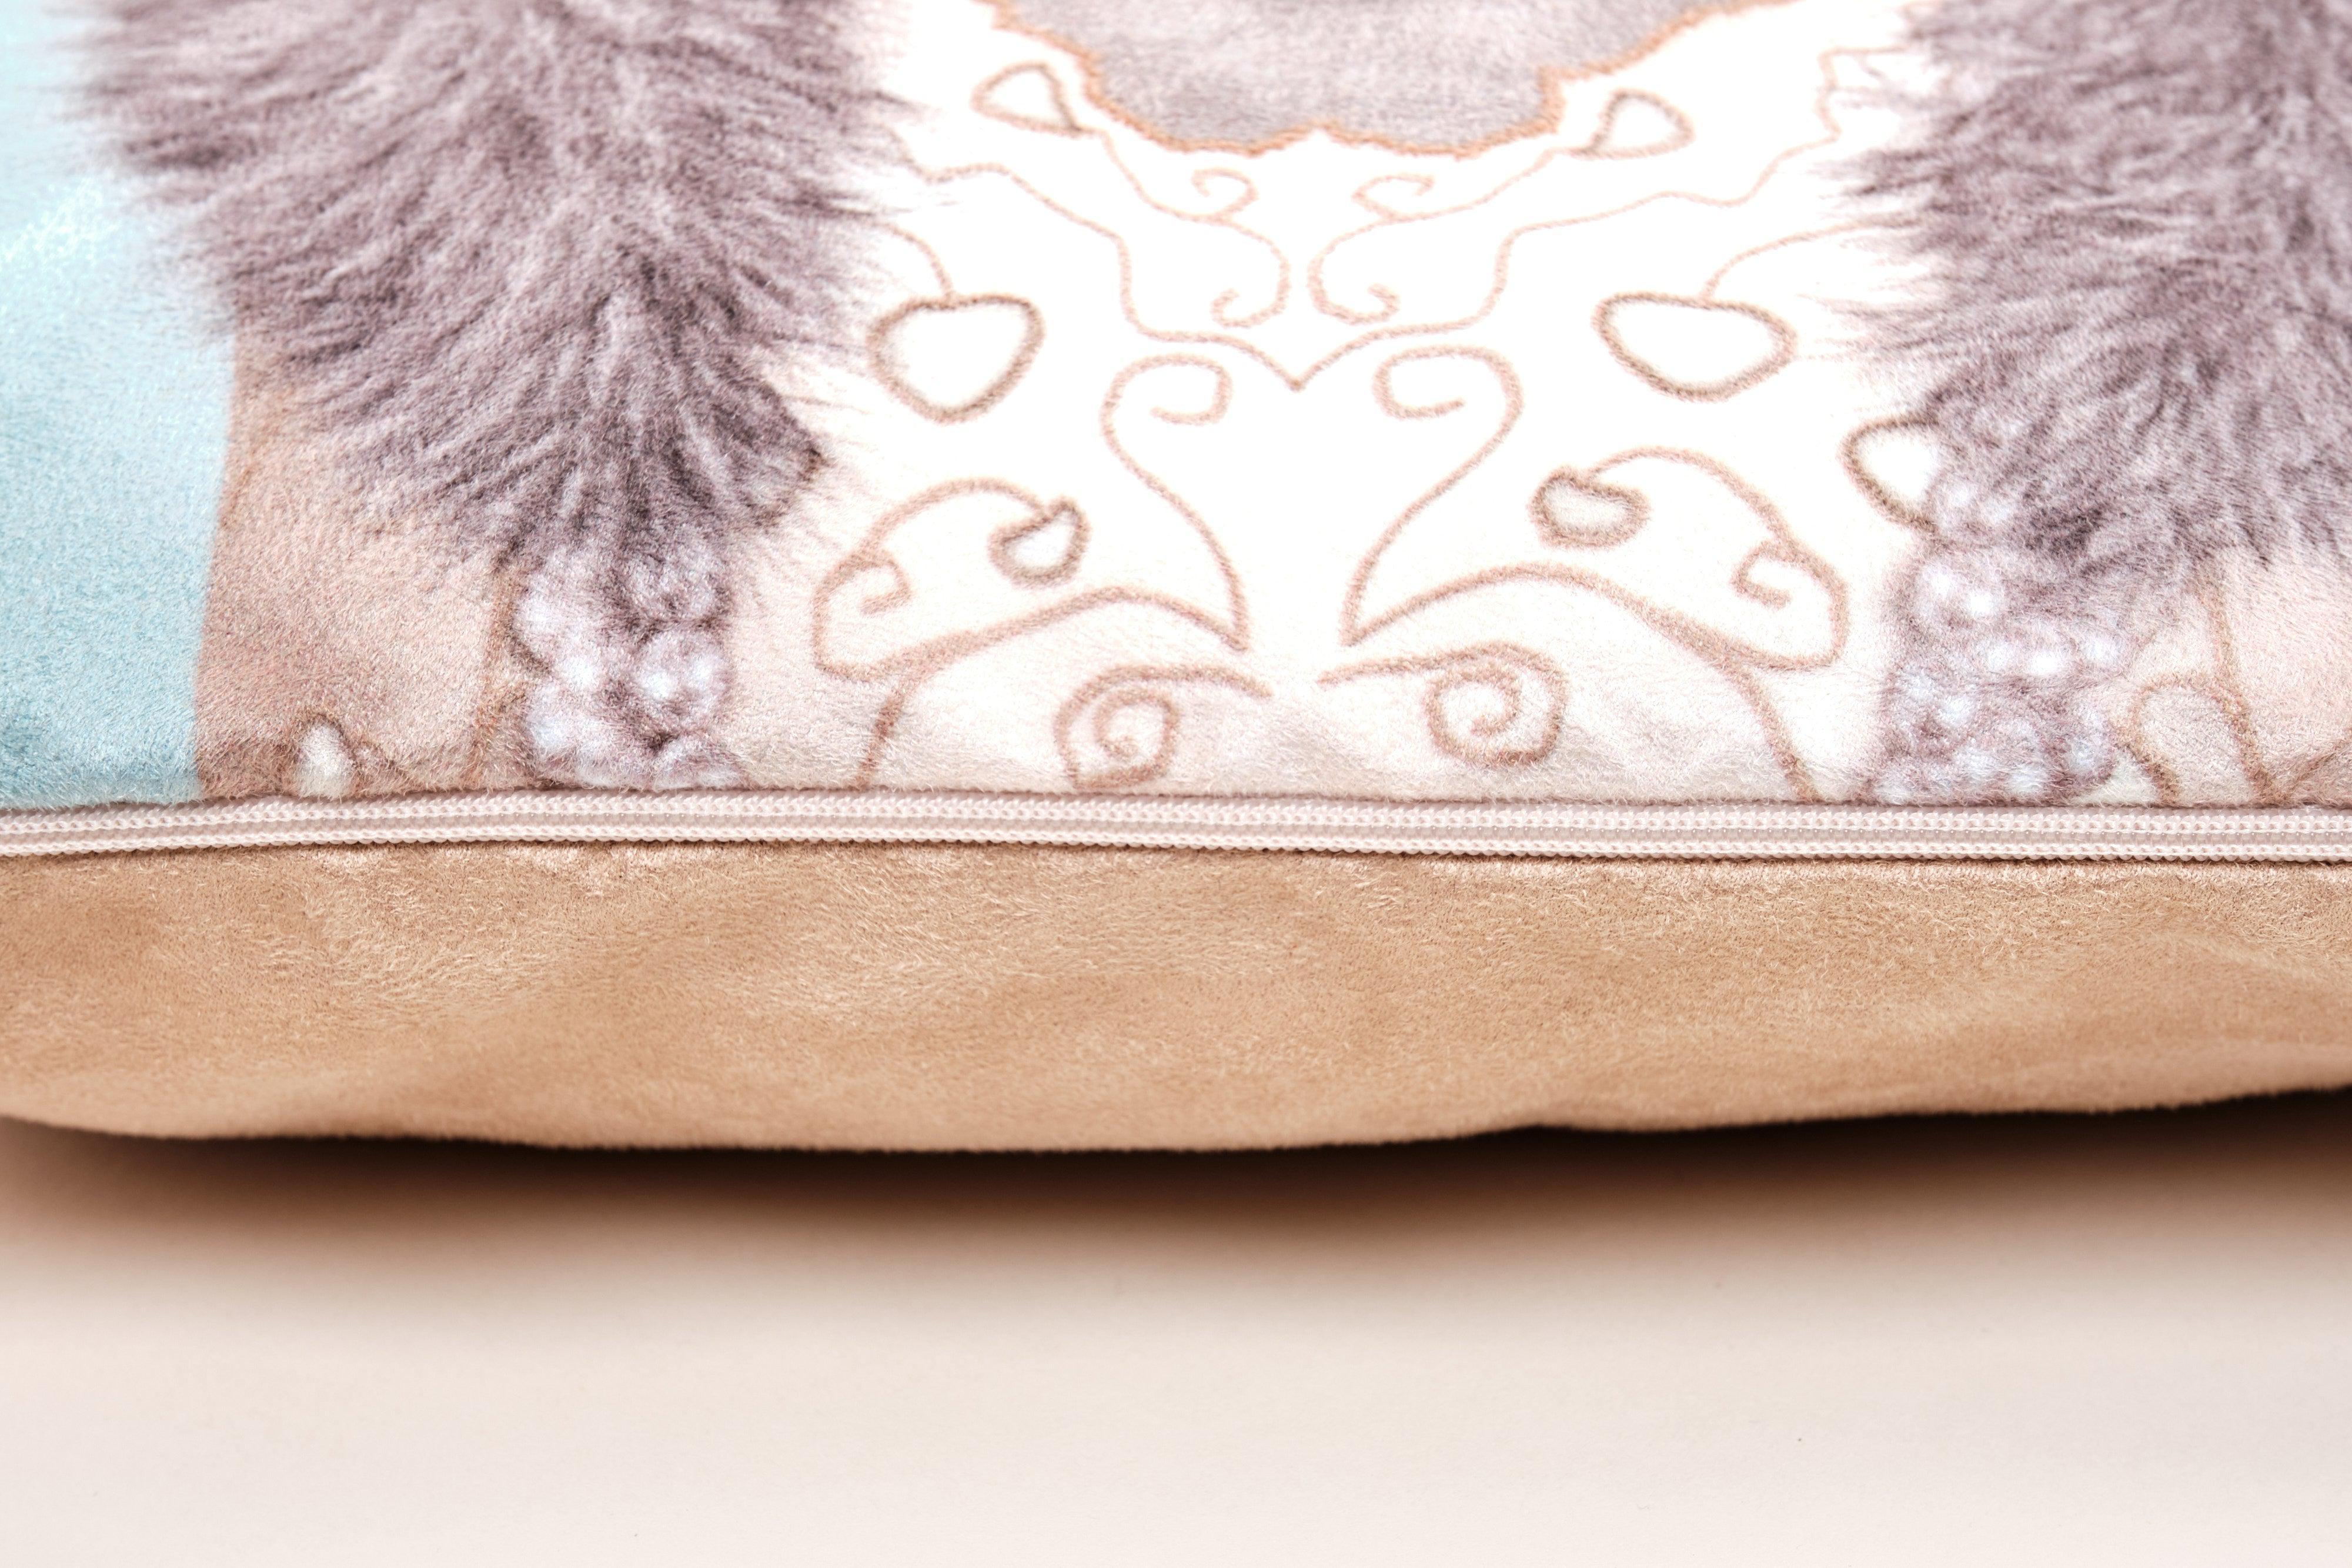 Paris Bonne Vacance Cushion - Paperlollipop Cushion - Handmade Cushions UK - WeLoveCushions